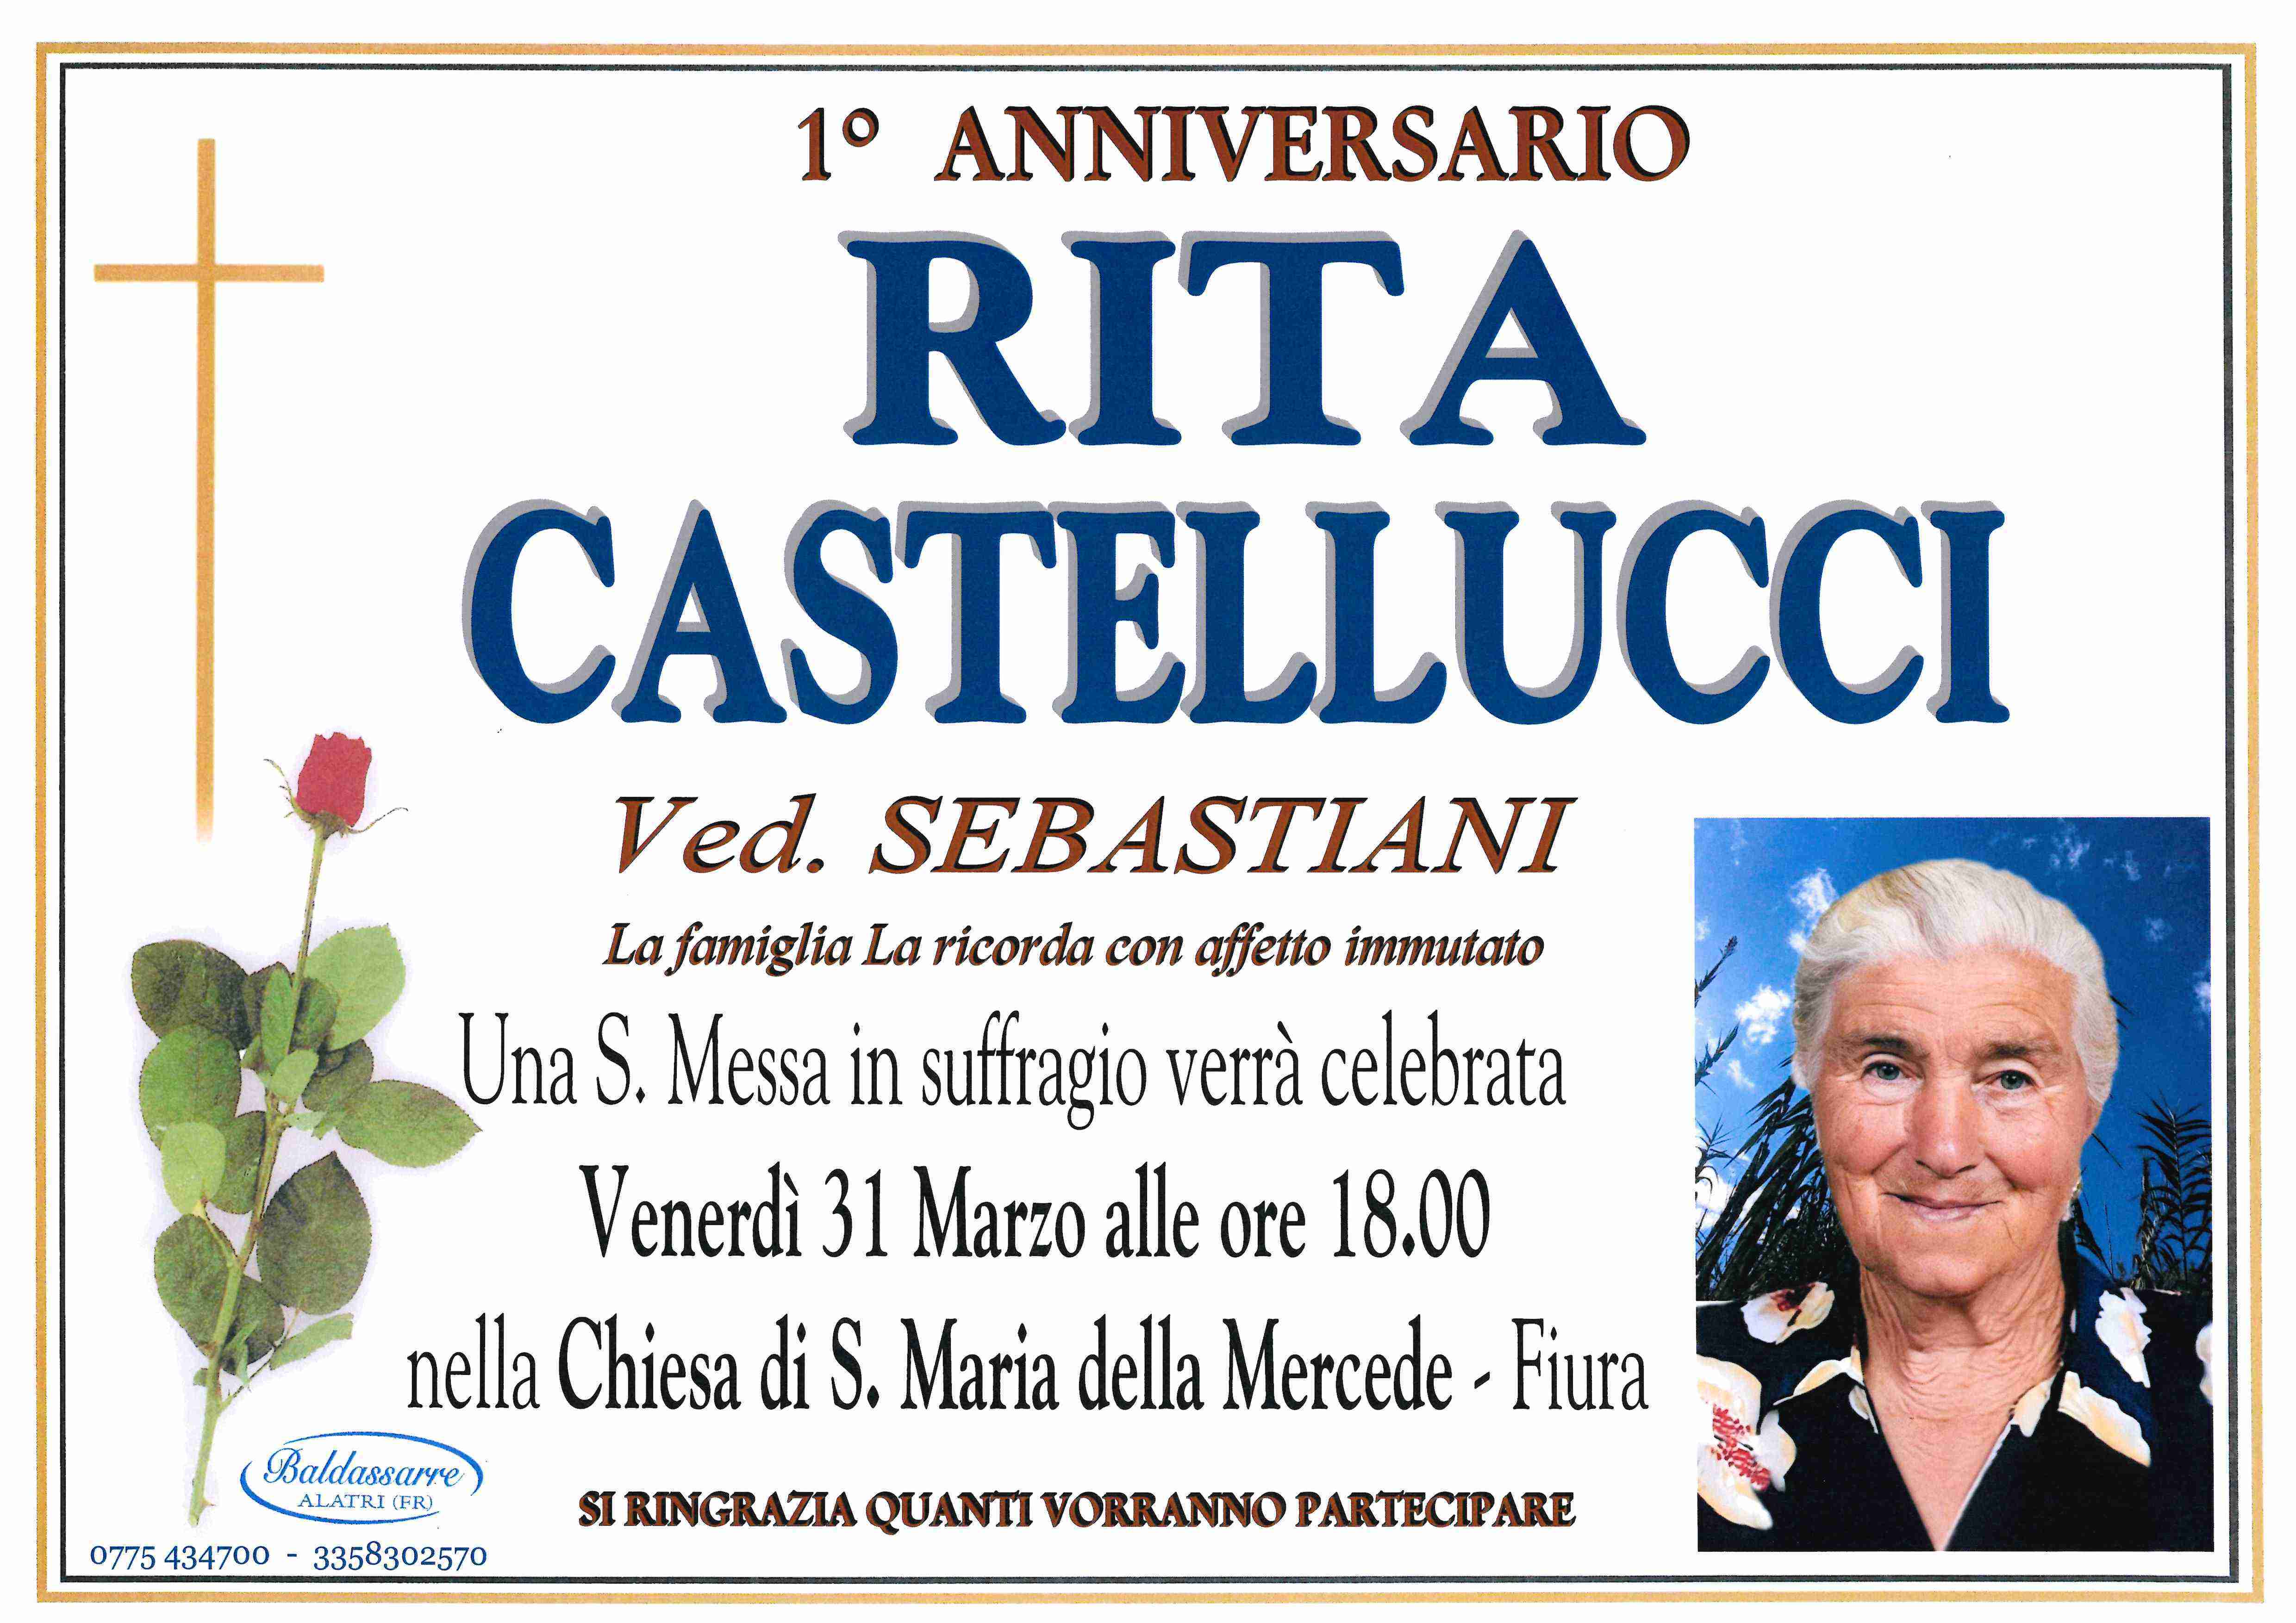 Rita Castellucci